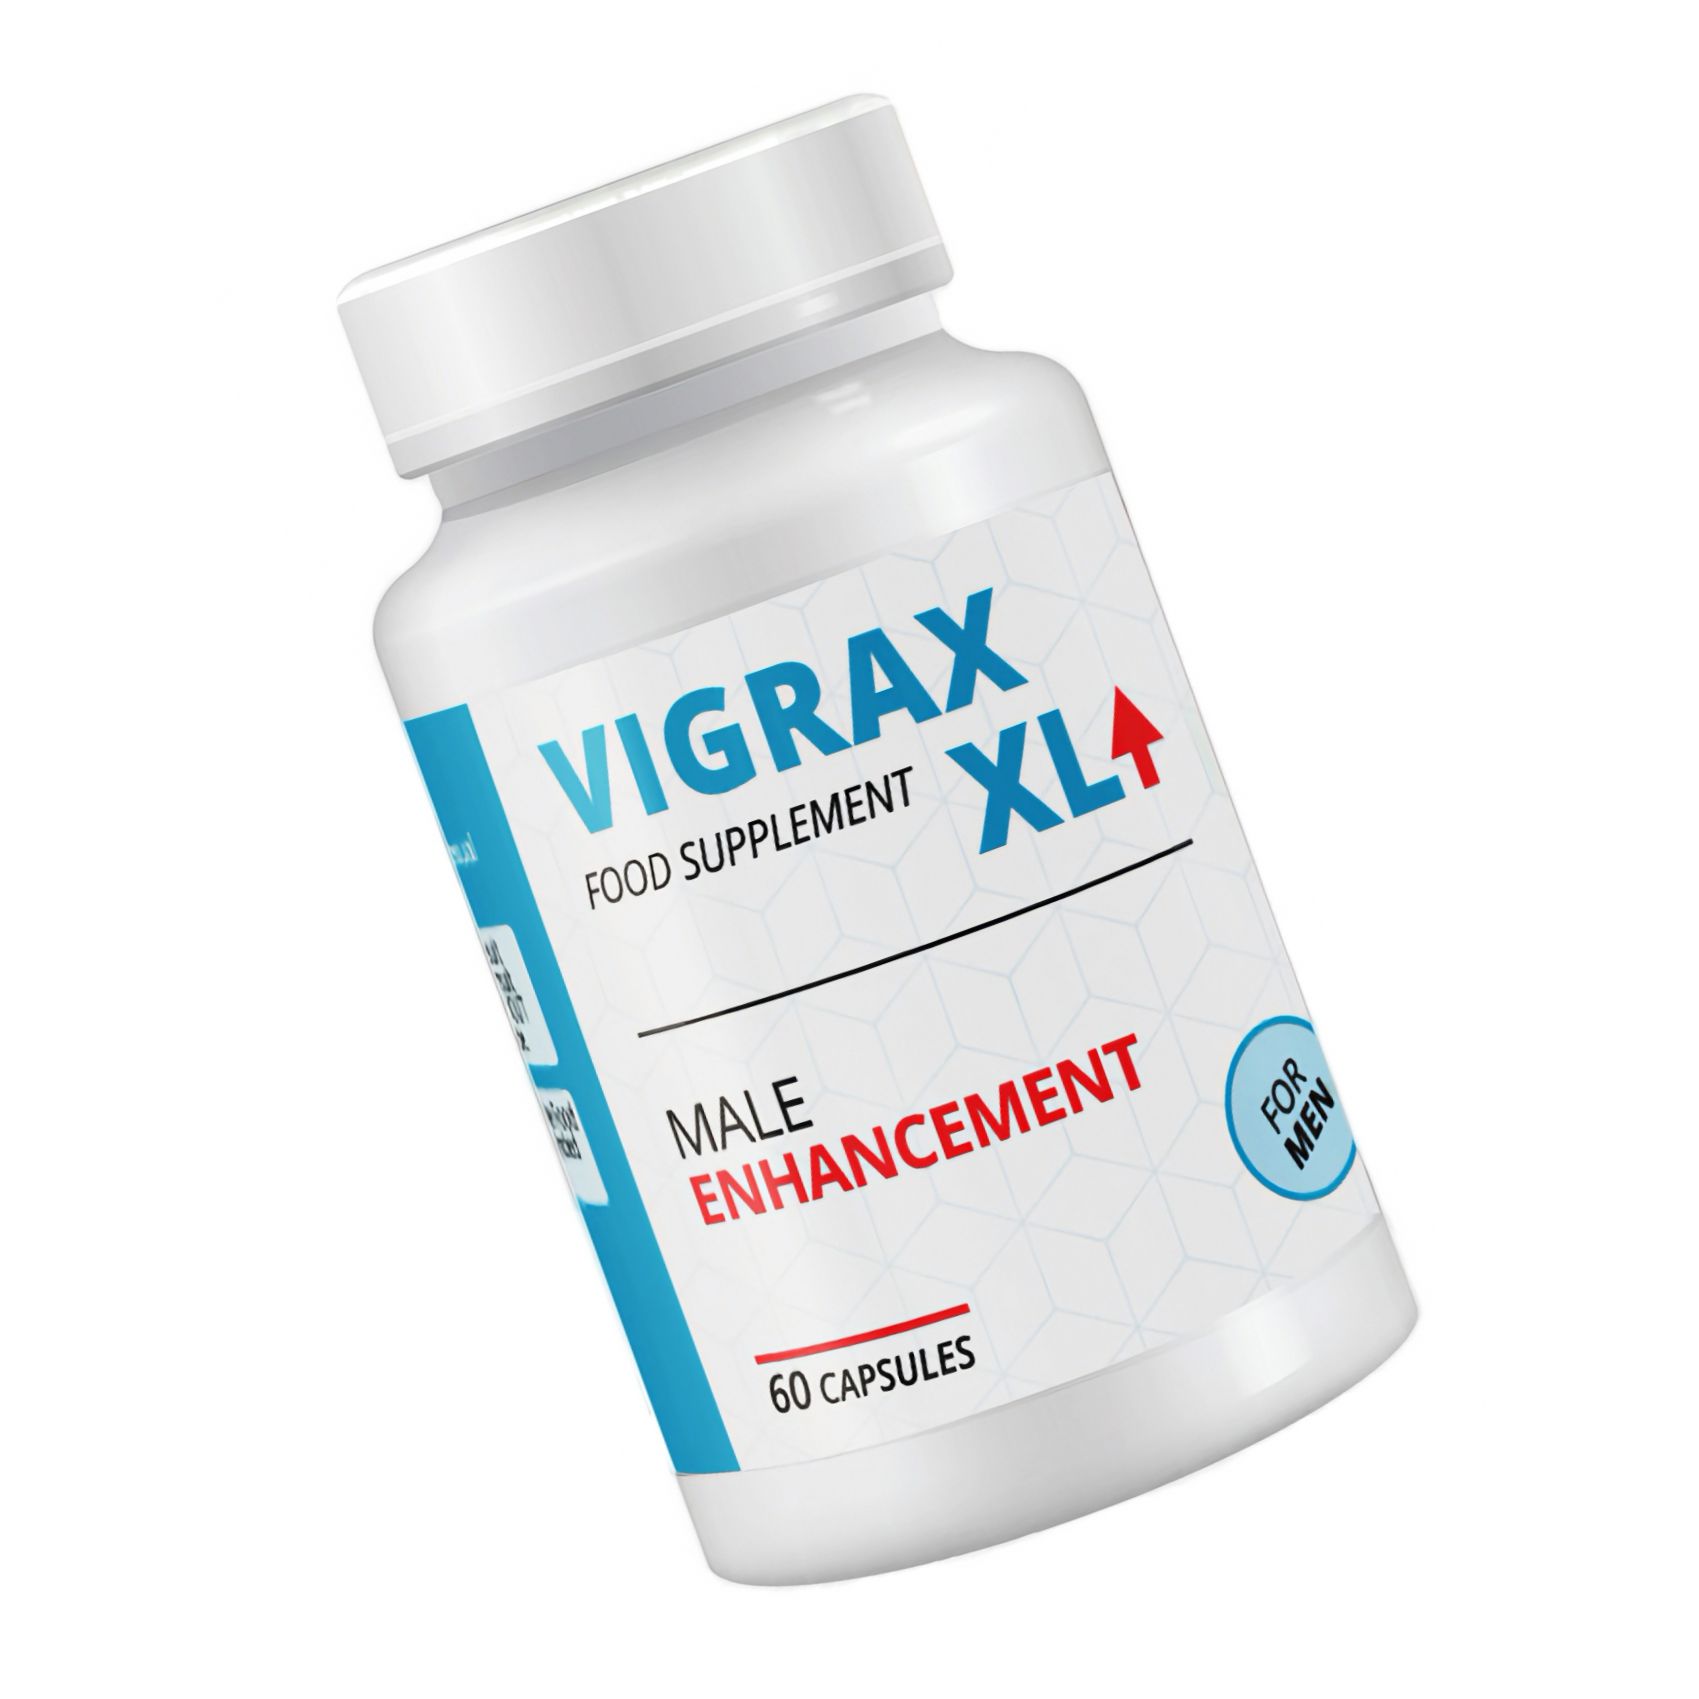 Vigrax XL